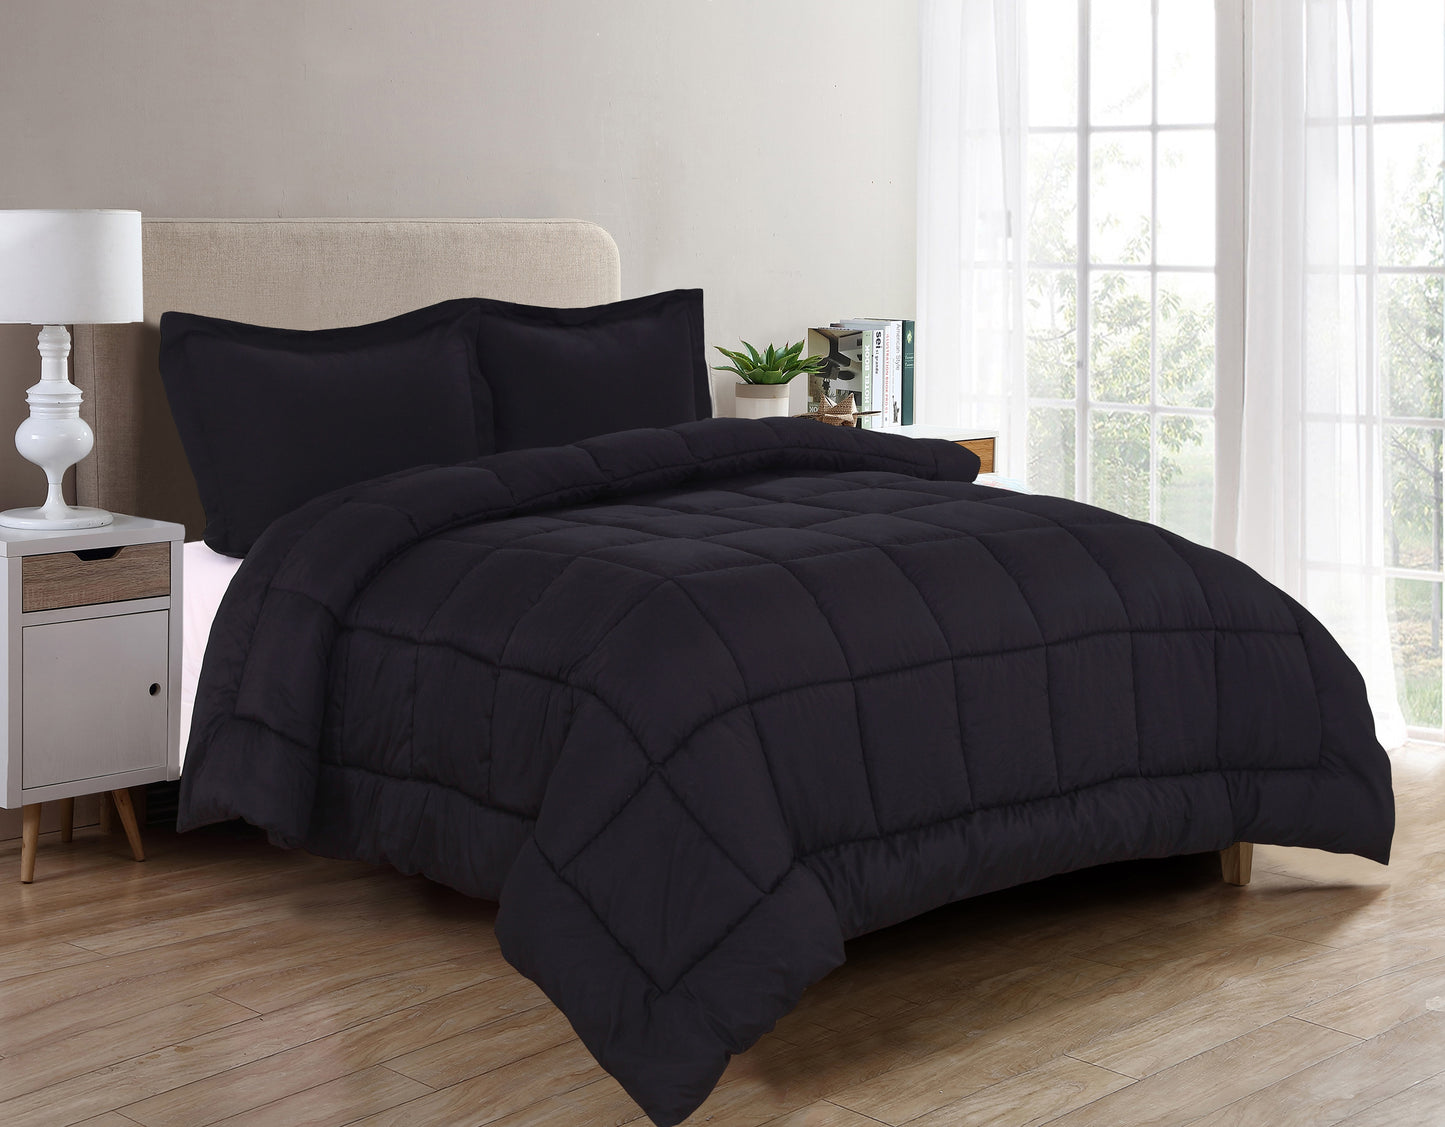 Elegant Comfort 3-Piece Solid Box Stitched Comforter & Shams - Double-Filled Comforter